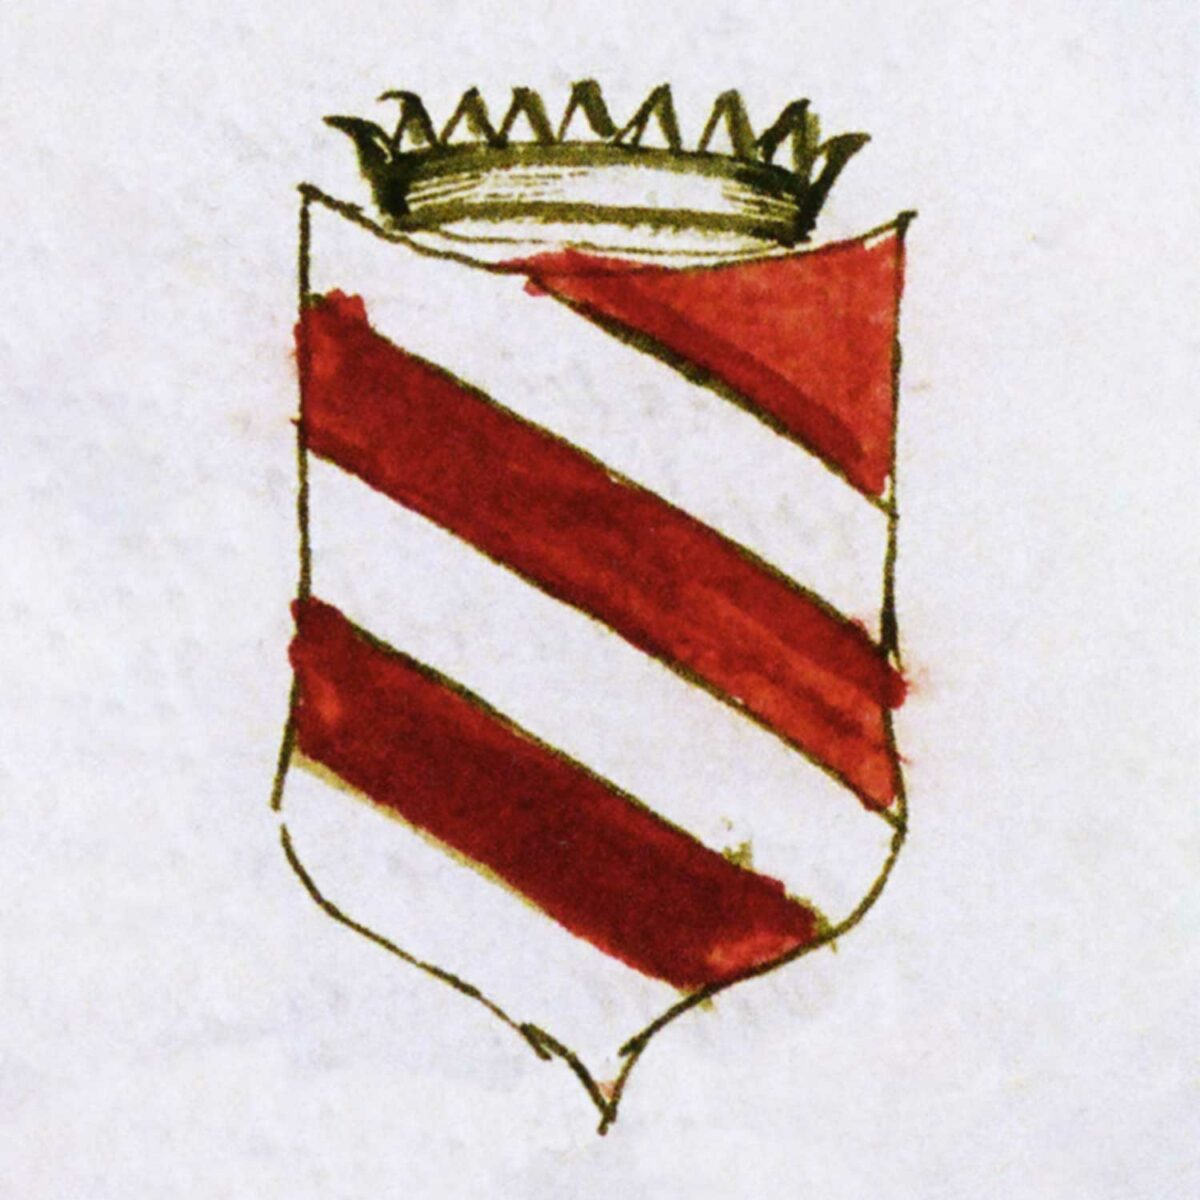 Stemma Pola - Genealogie trevigiane, voce Castel Pola XVI secolo di Nicolò Mauro